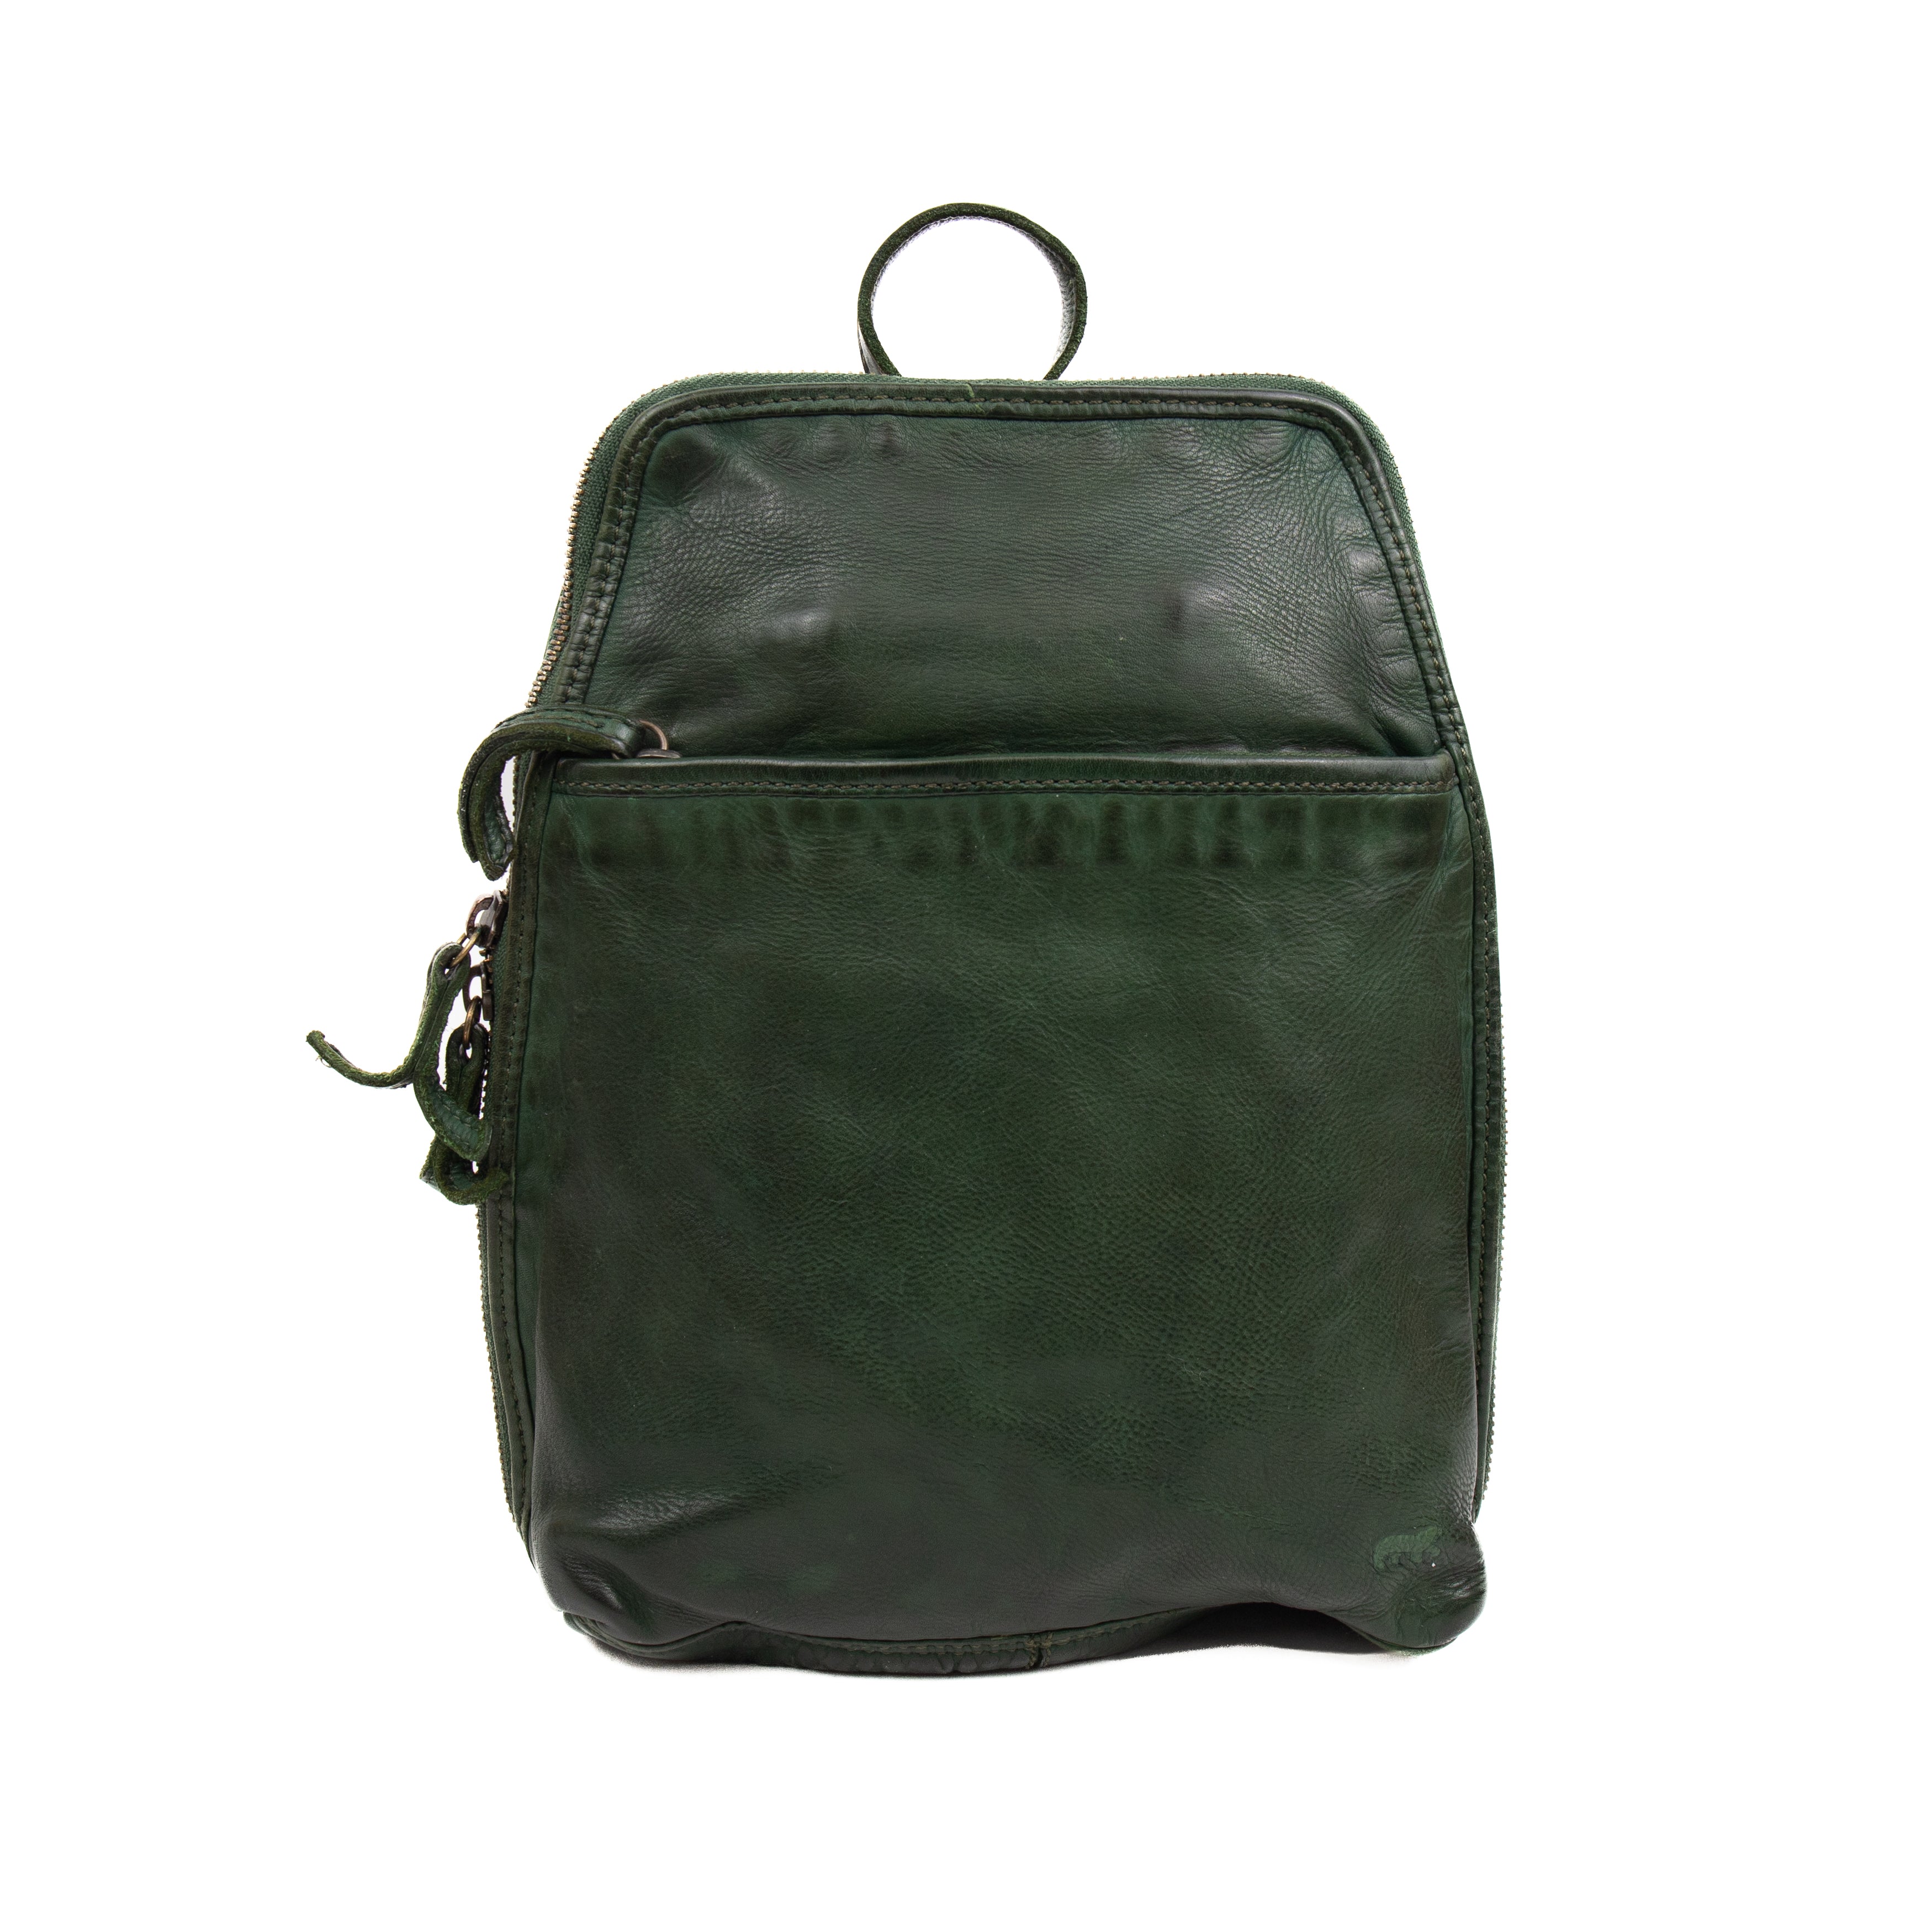 Backpack 'Iris' green - CL 32852